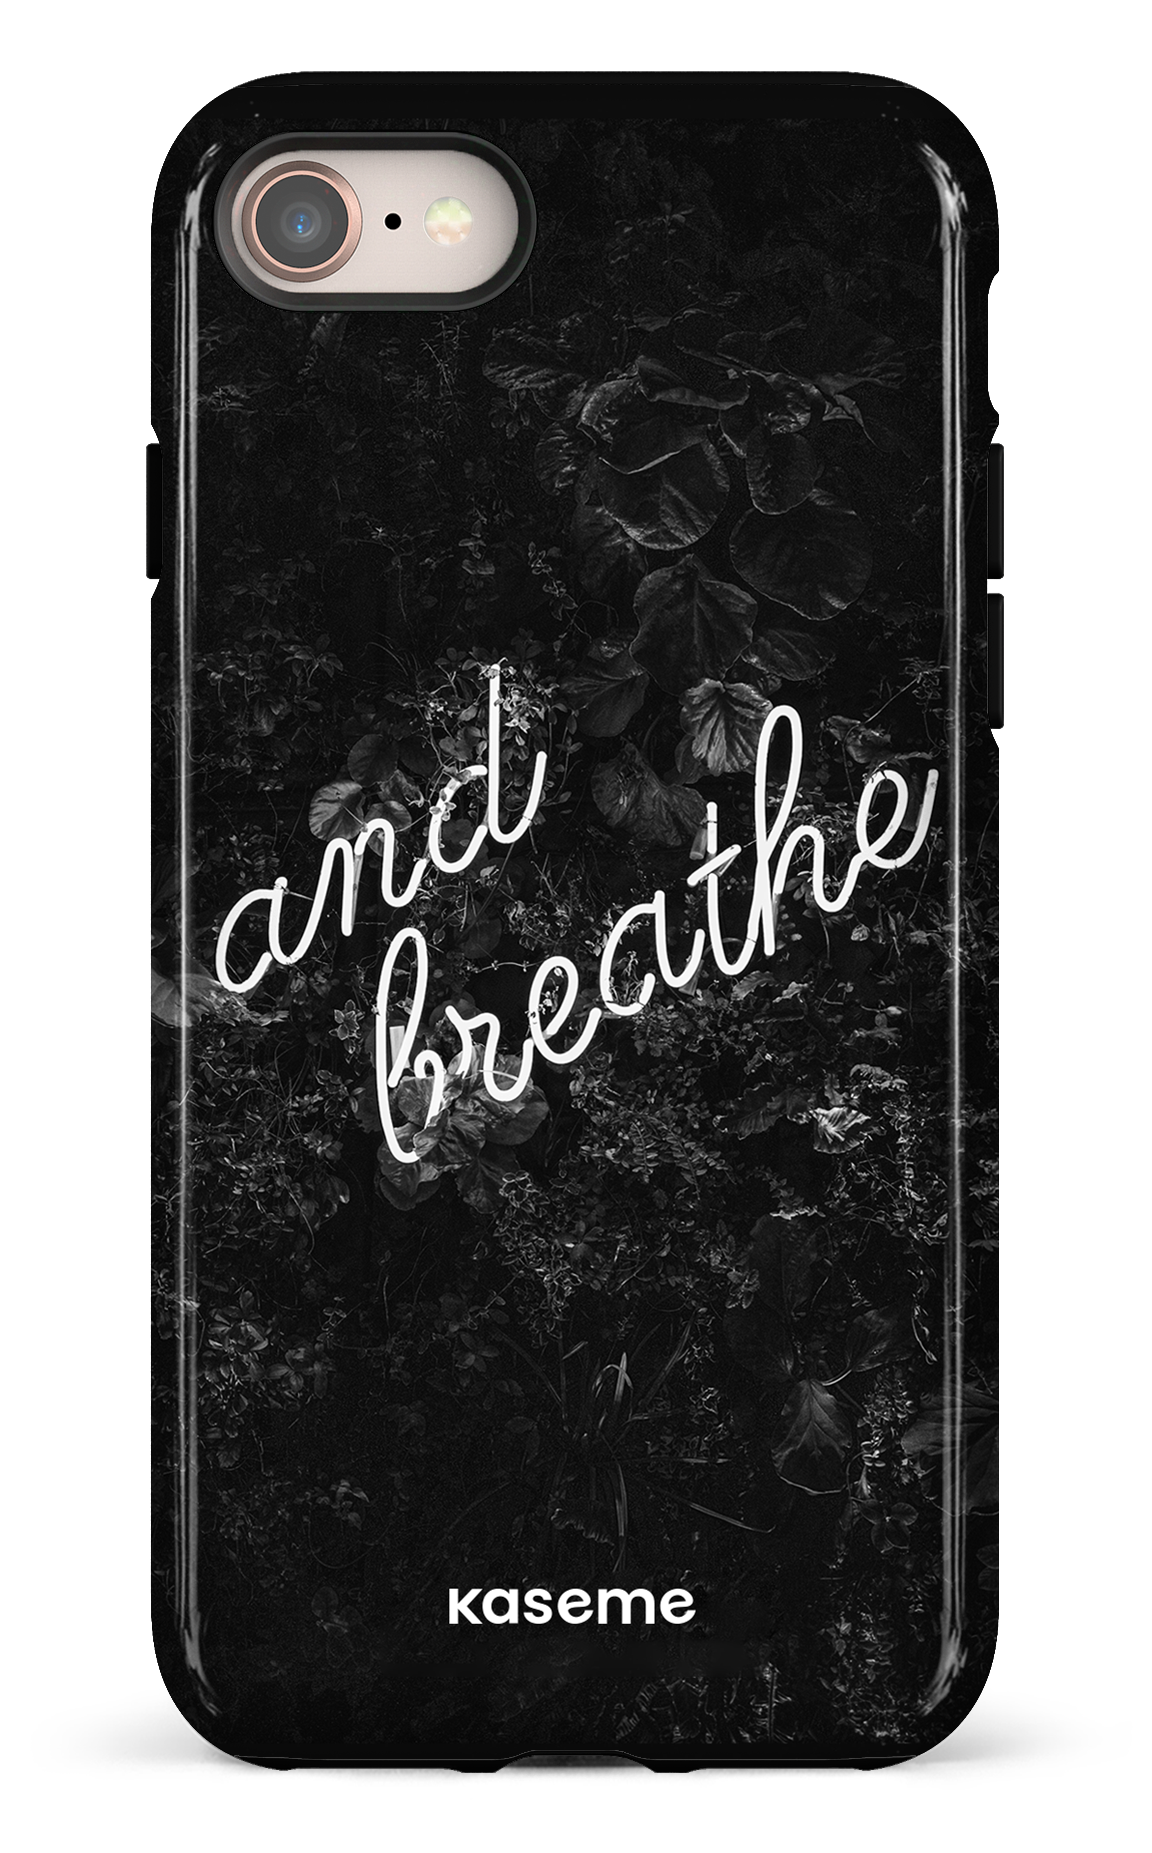 Exhale - iPhone 7